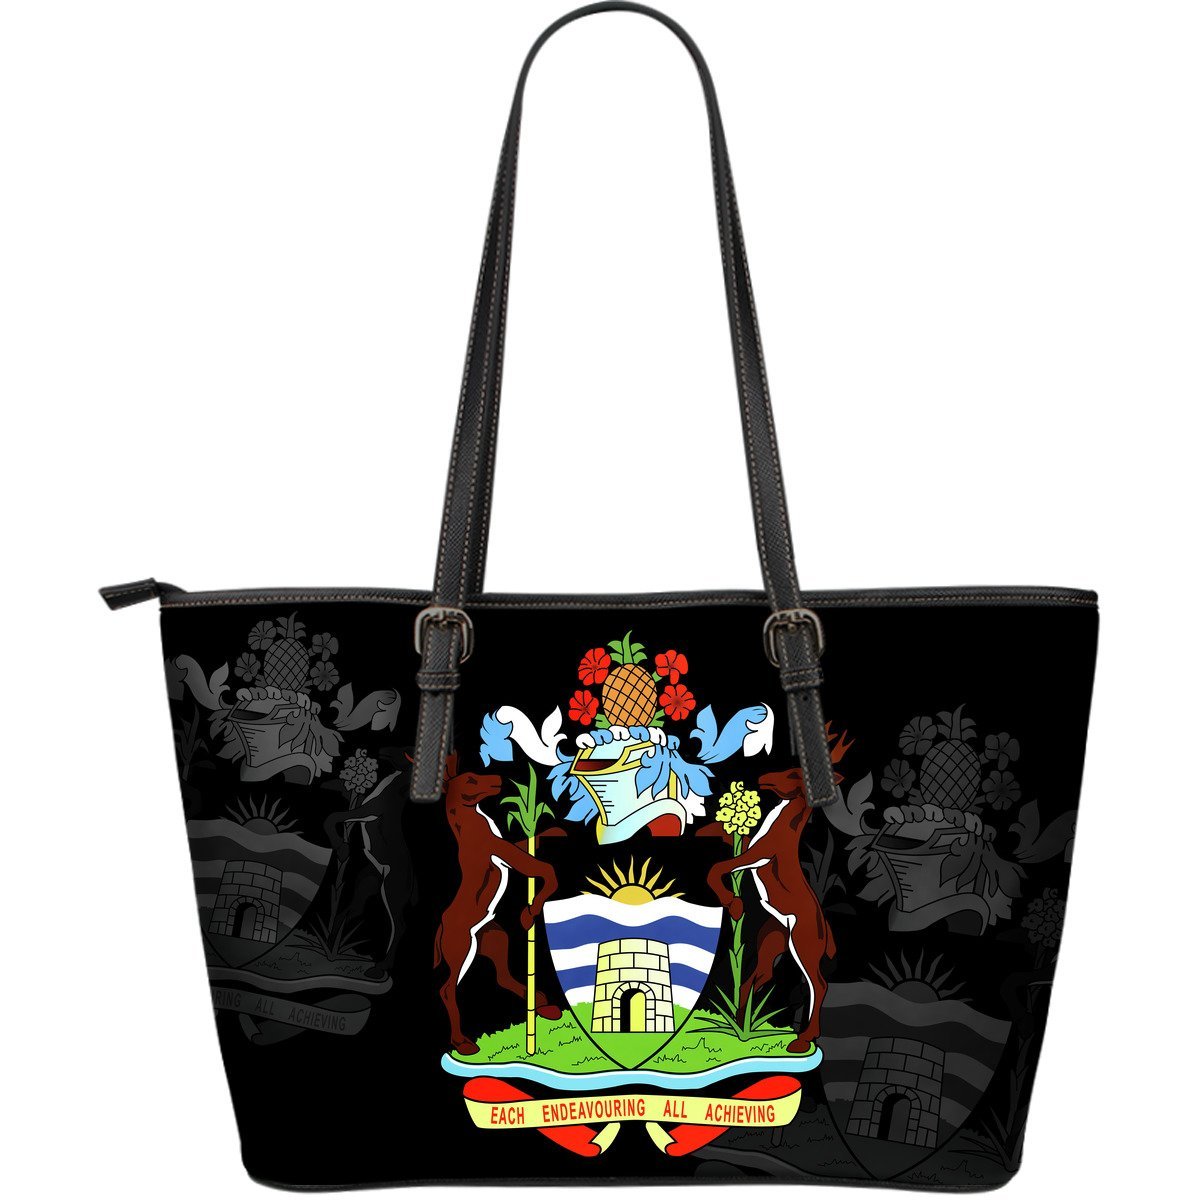 antigua-and-barbuda-leather-tote-bag-large-size